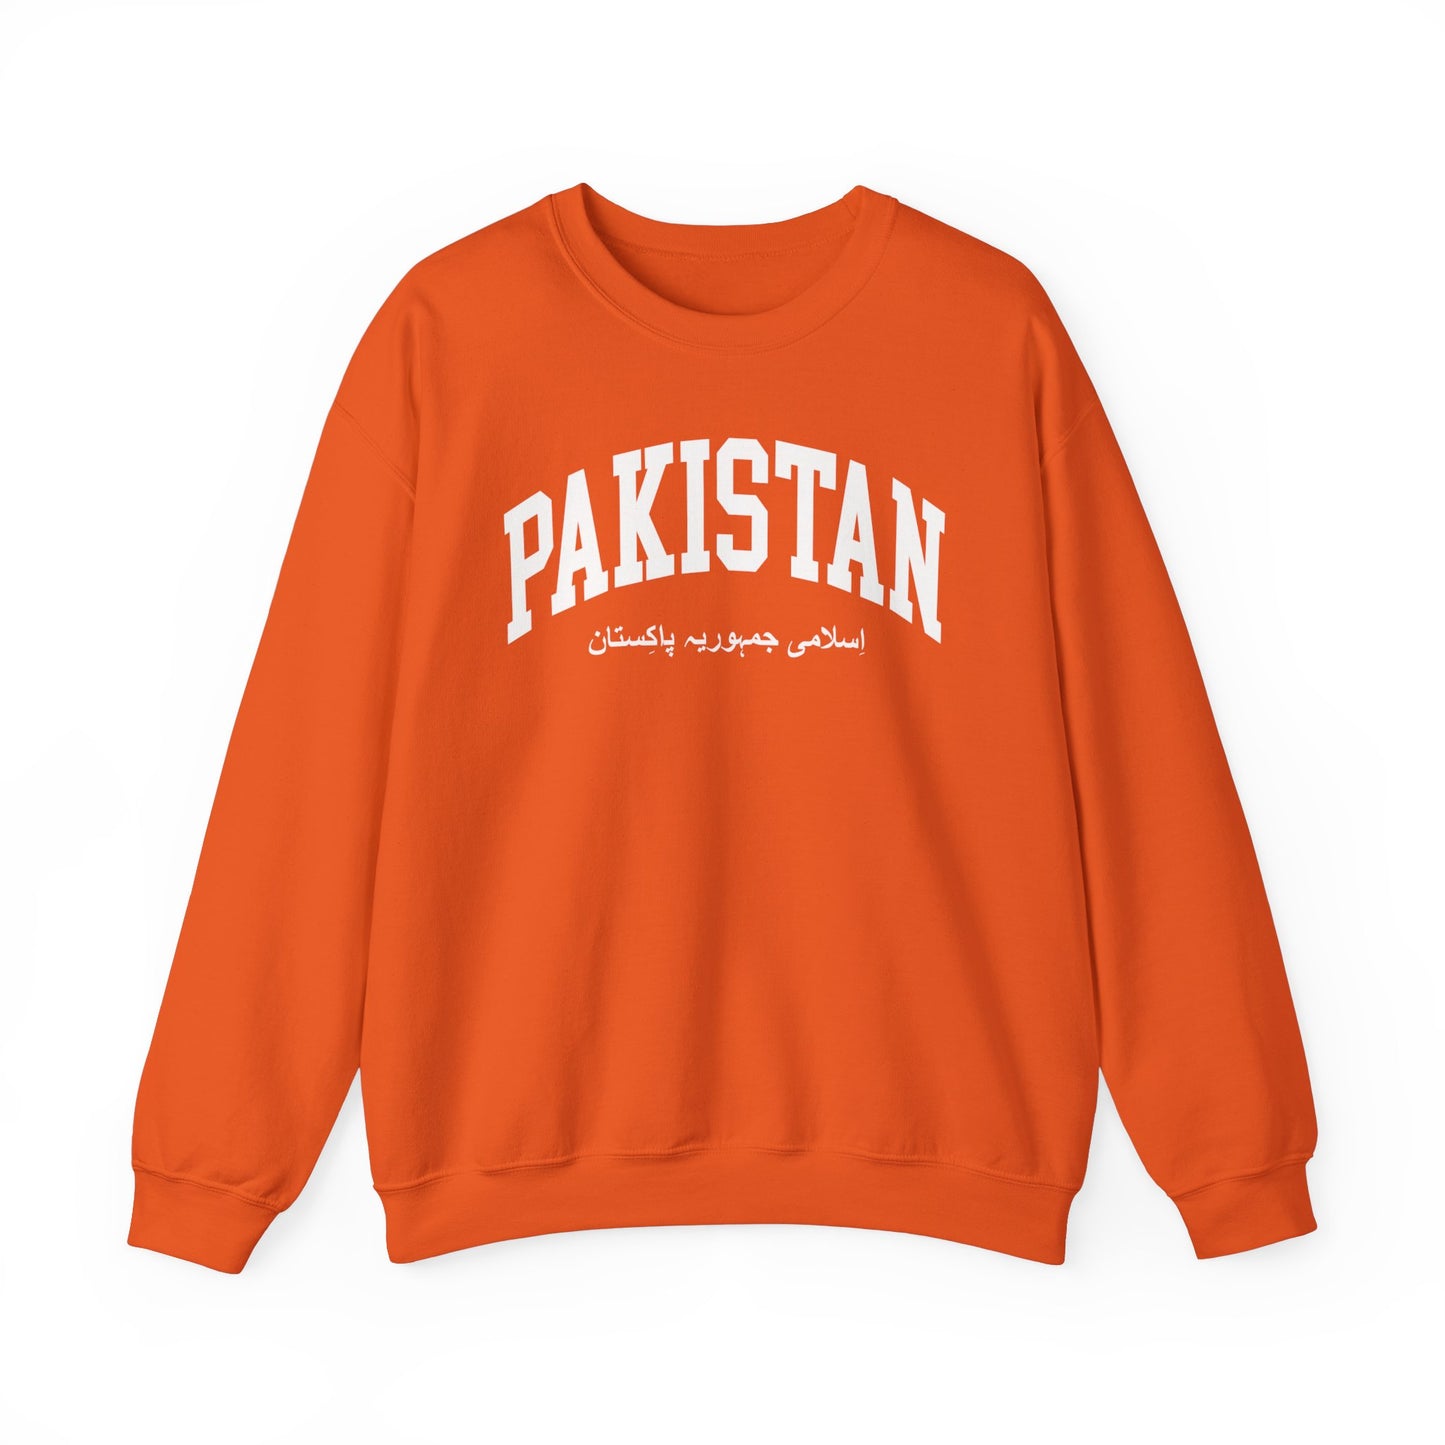 Pakistan Sweatshirt